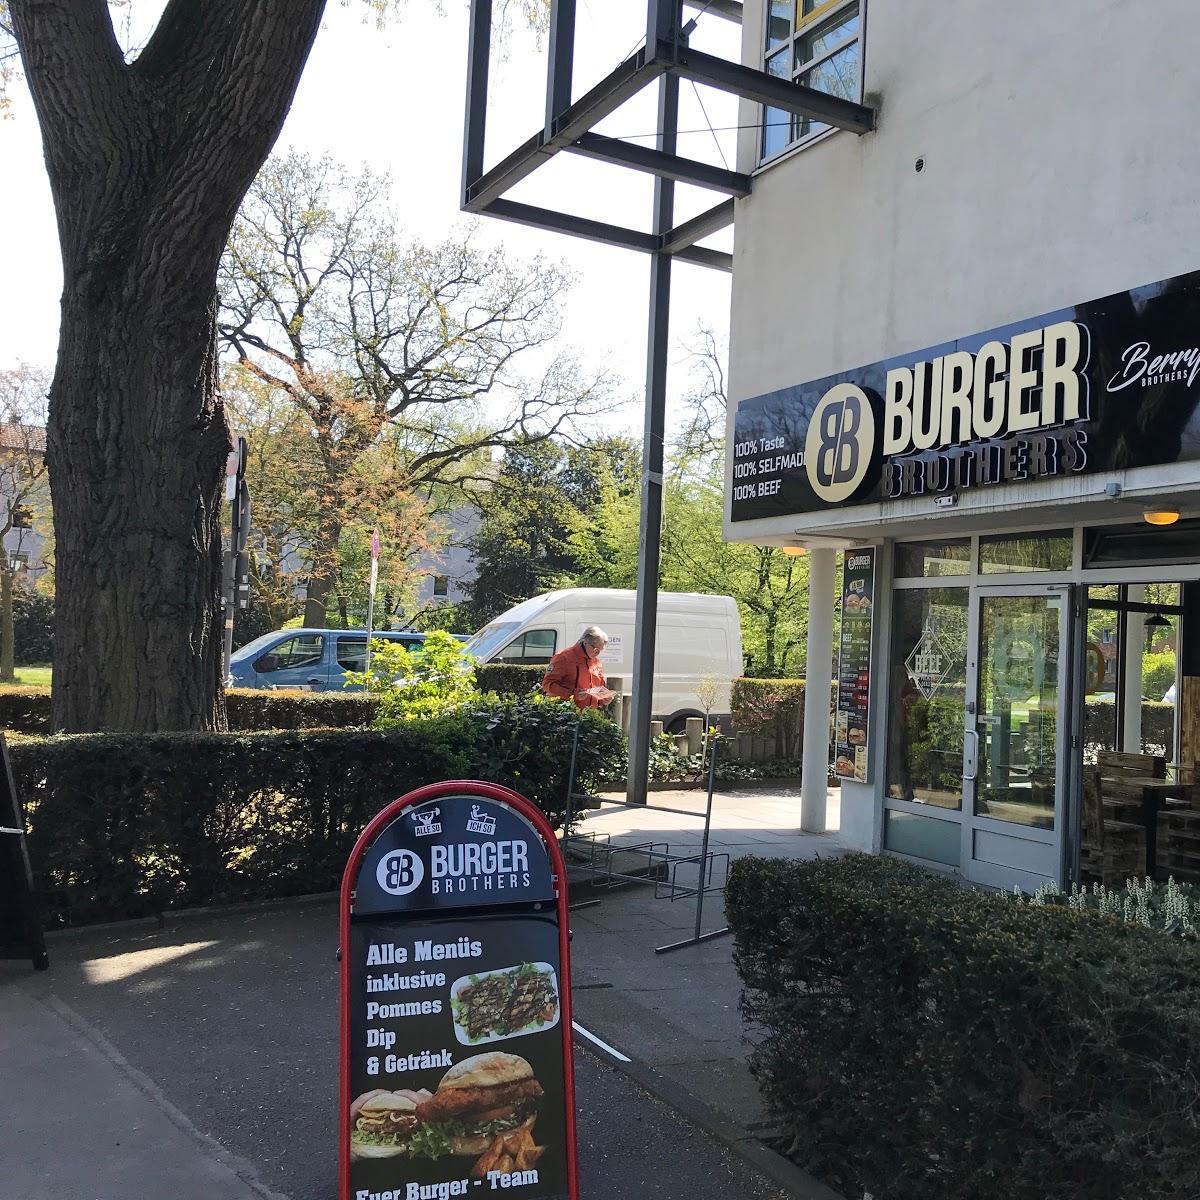 Restaurant "Burger Brothers" in Köln